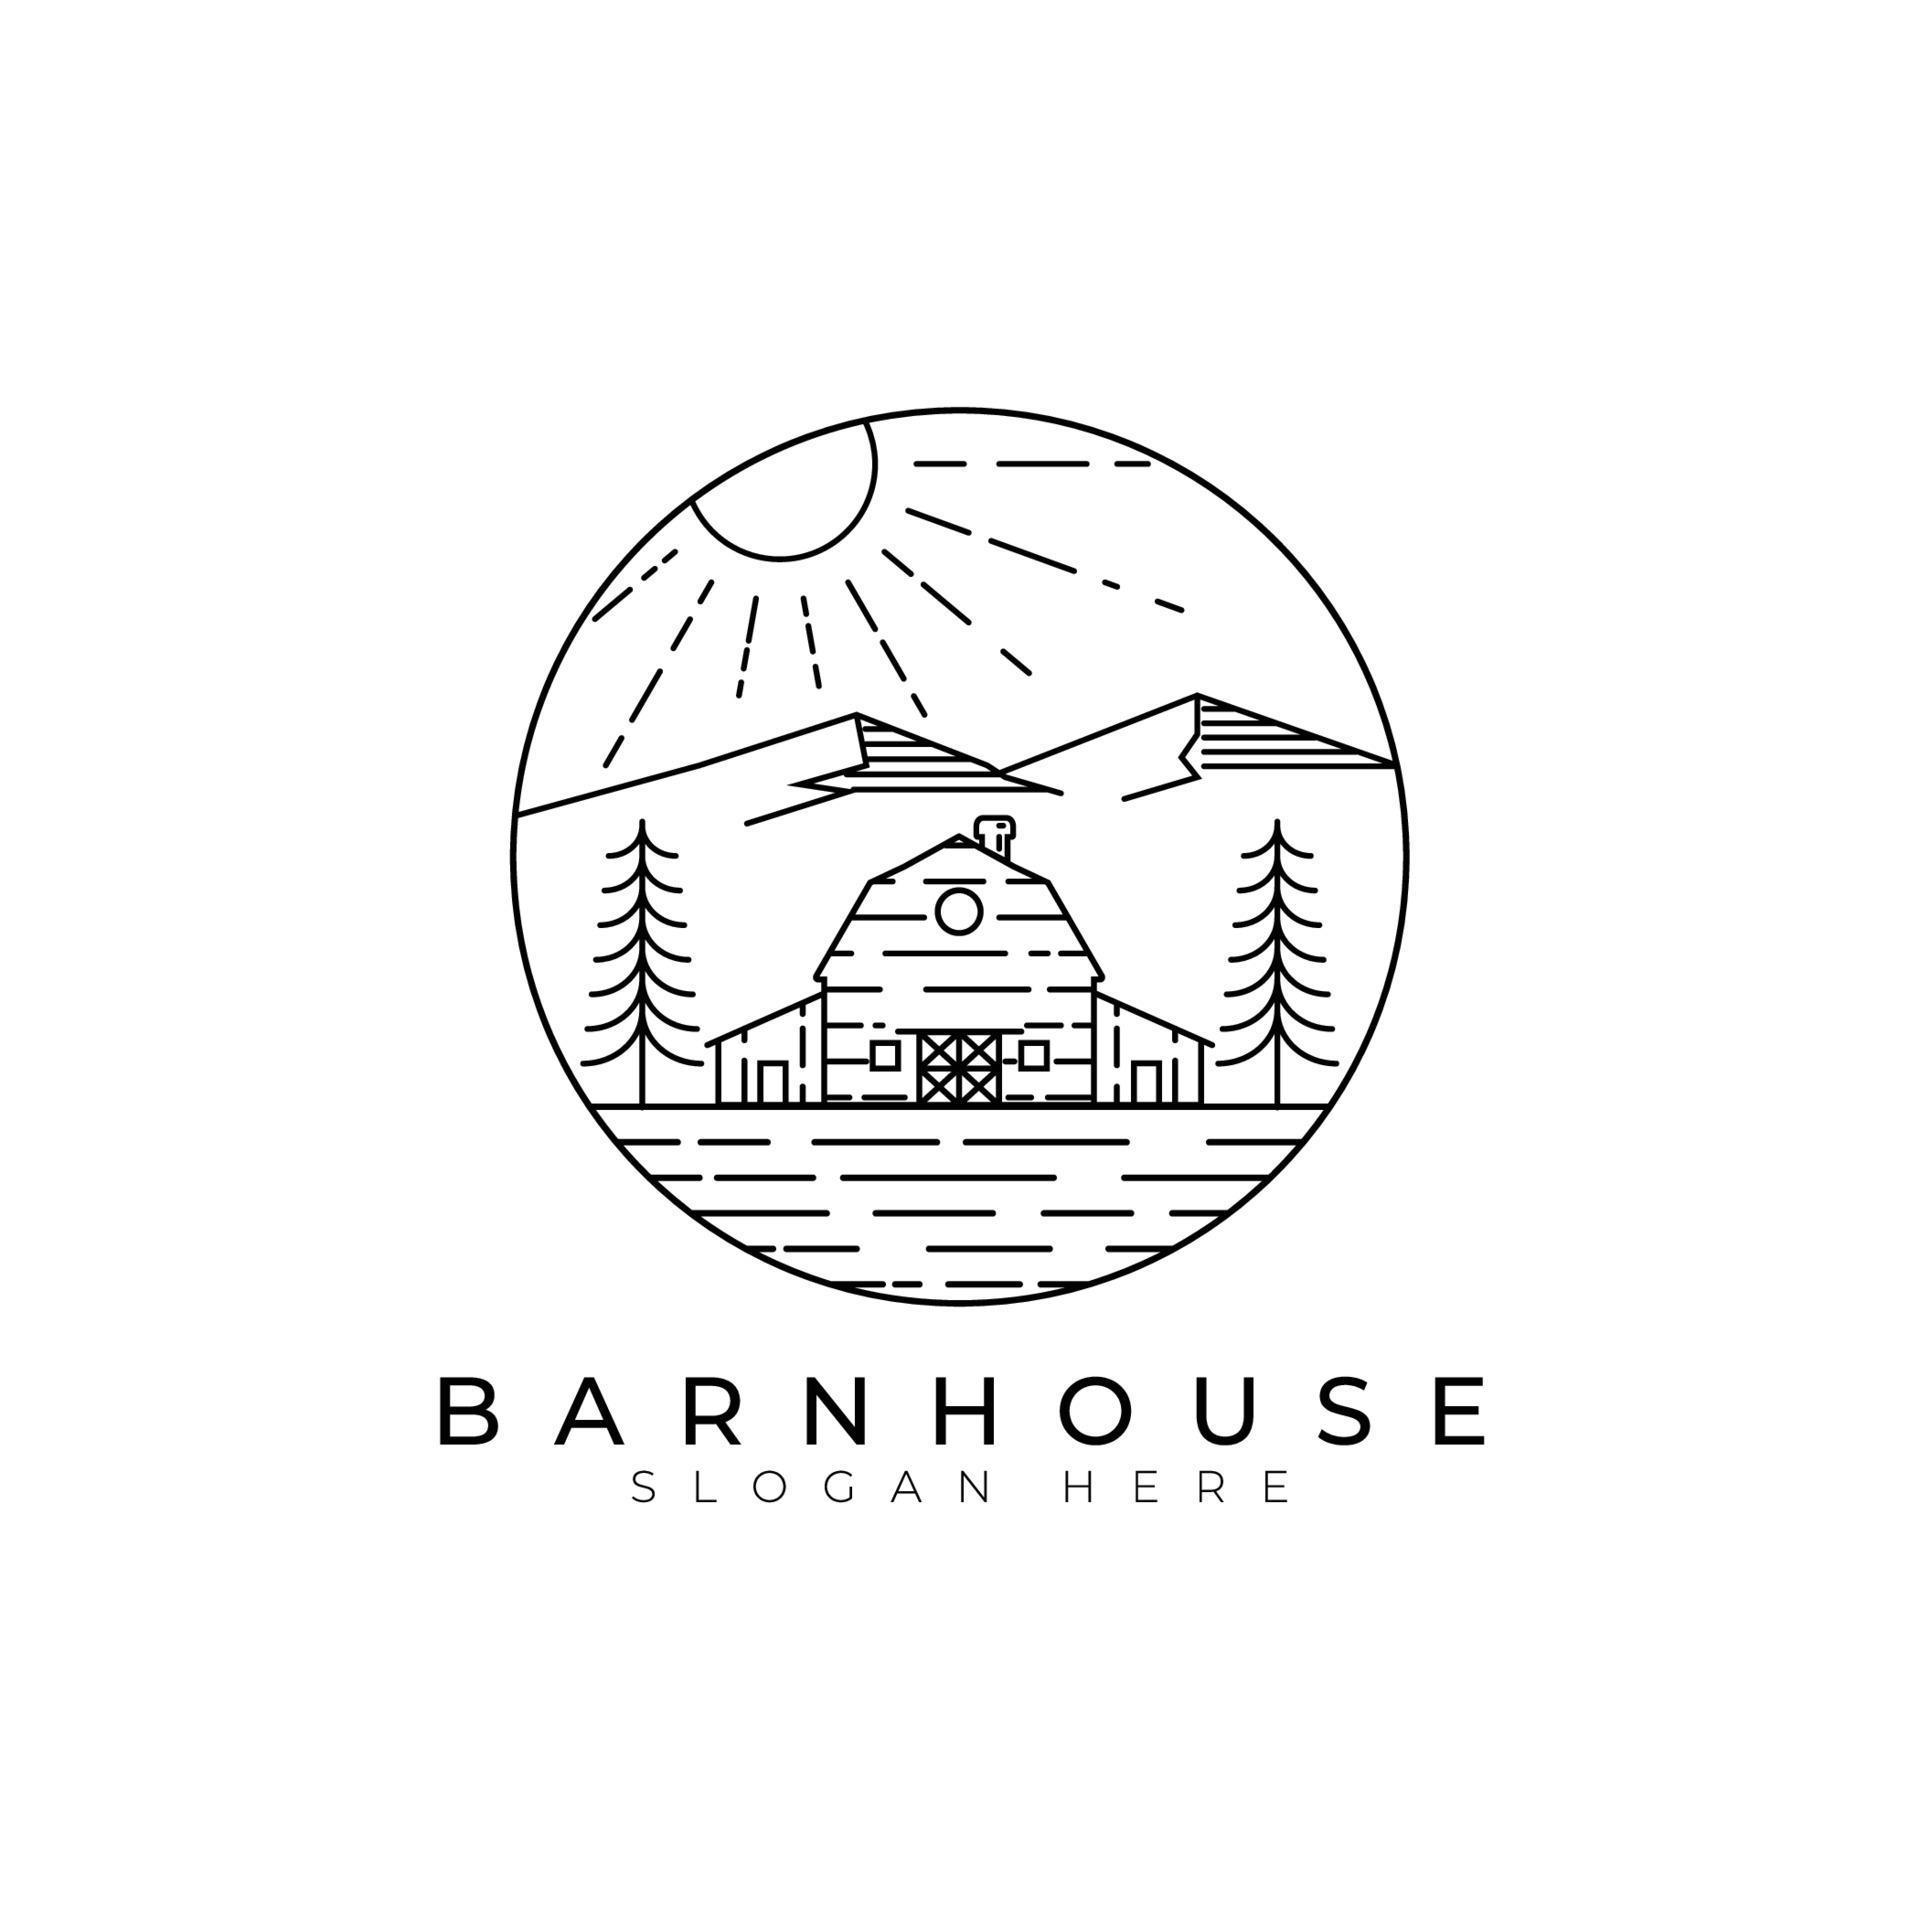 Barn house logo vector illustration template design, countryside barn ...